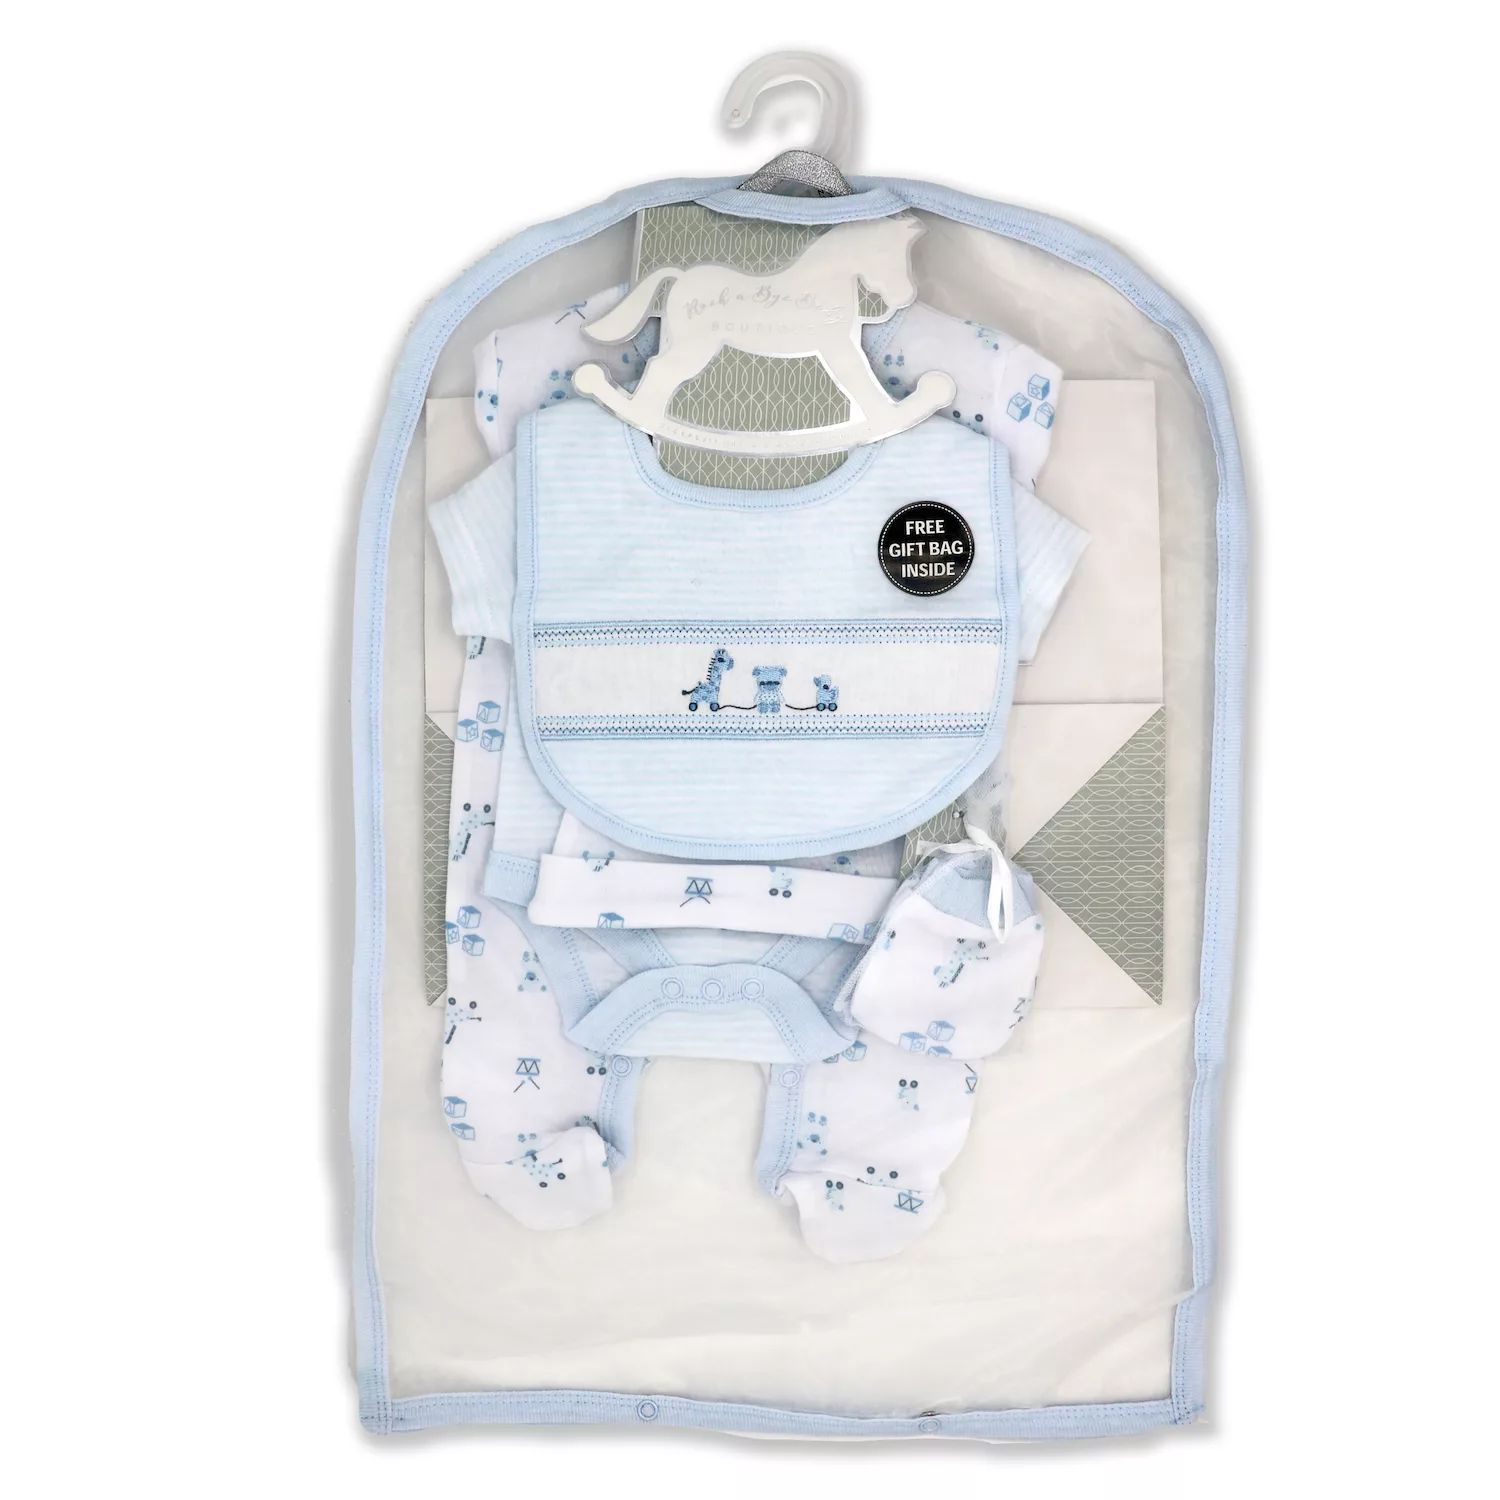 bye bye paris mother baby care bag hi̇gh quality warranty period month 12 Подарочный набор Layette Blue Toys для маленьких мальчиков из 5 предметов в сетчатой ​​сумке Rock A Bye Baby Boutique